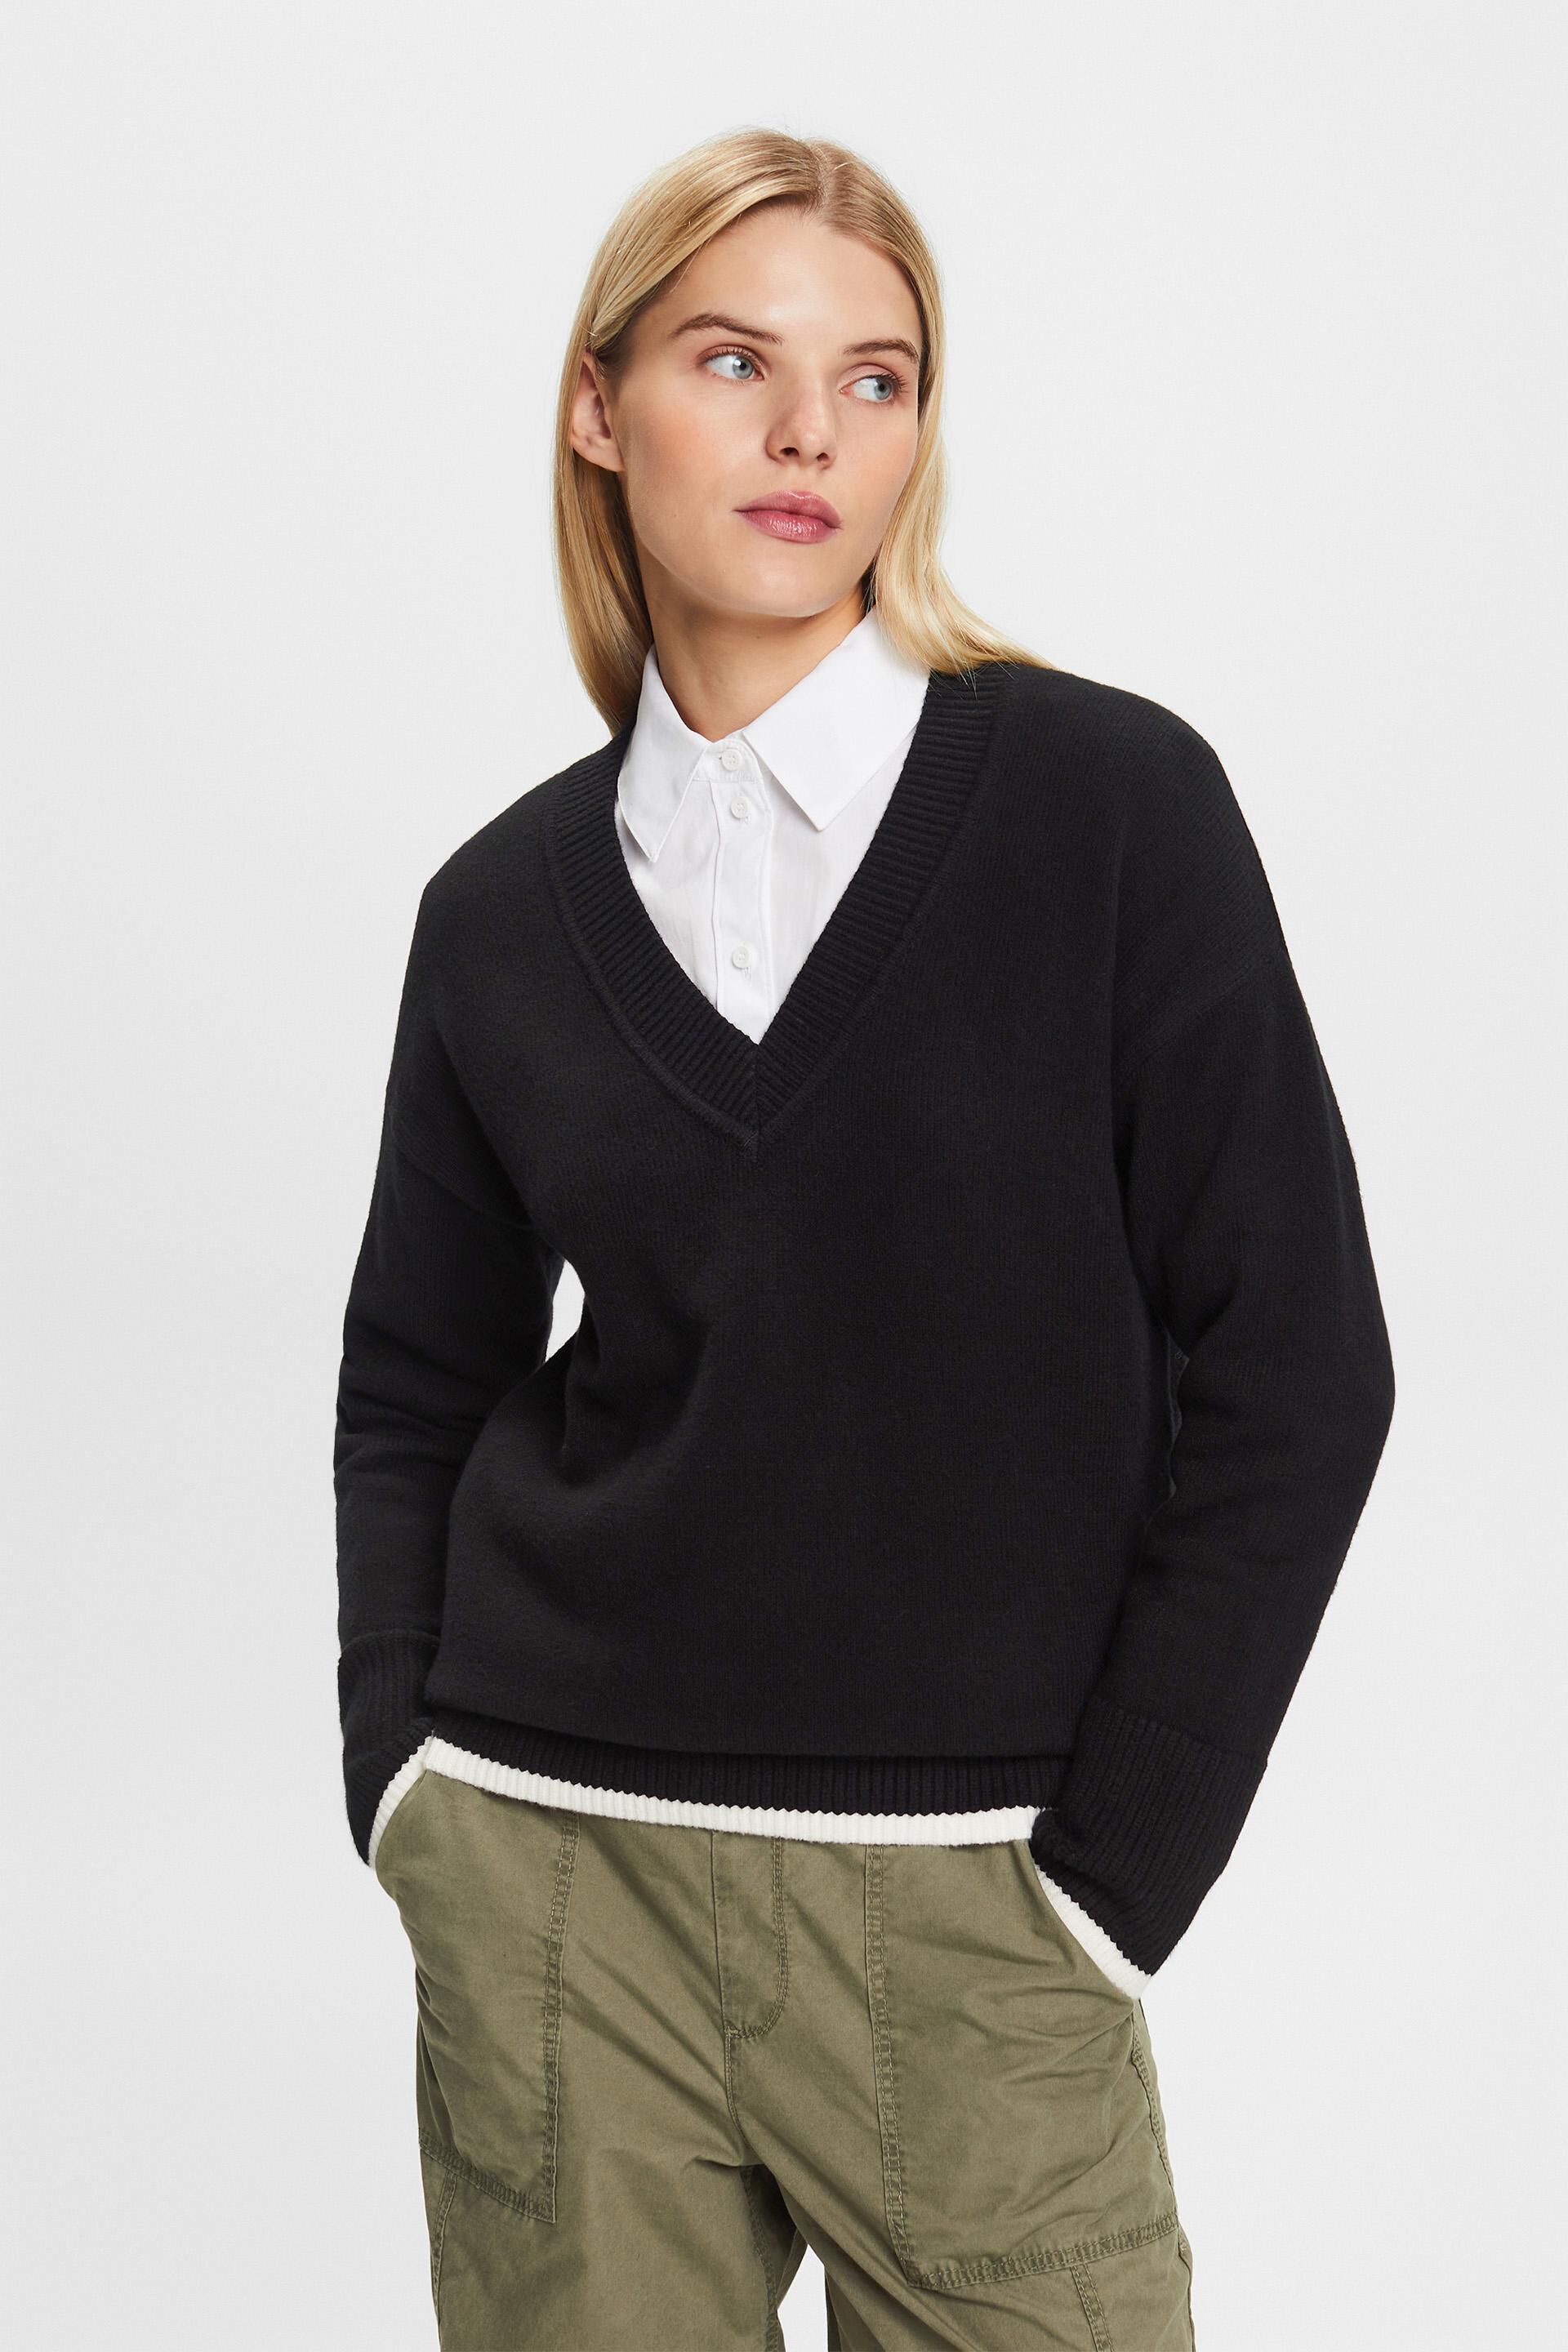 SUNDELL Sweaters for Women Pullover V Neck Oversized Sweater Knit